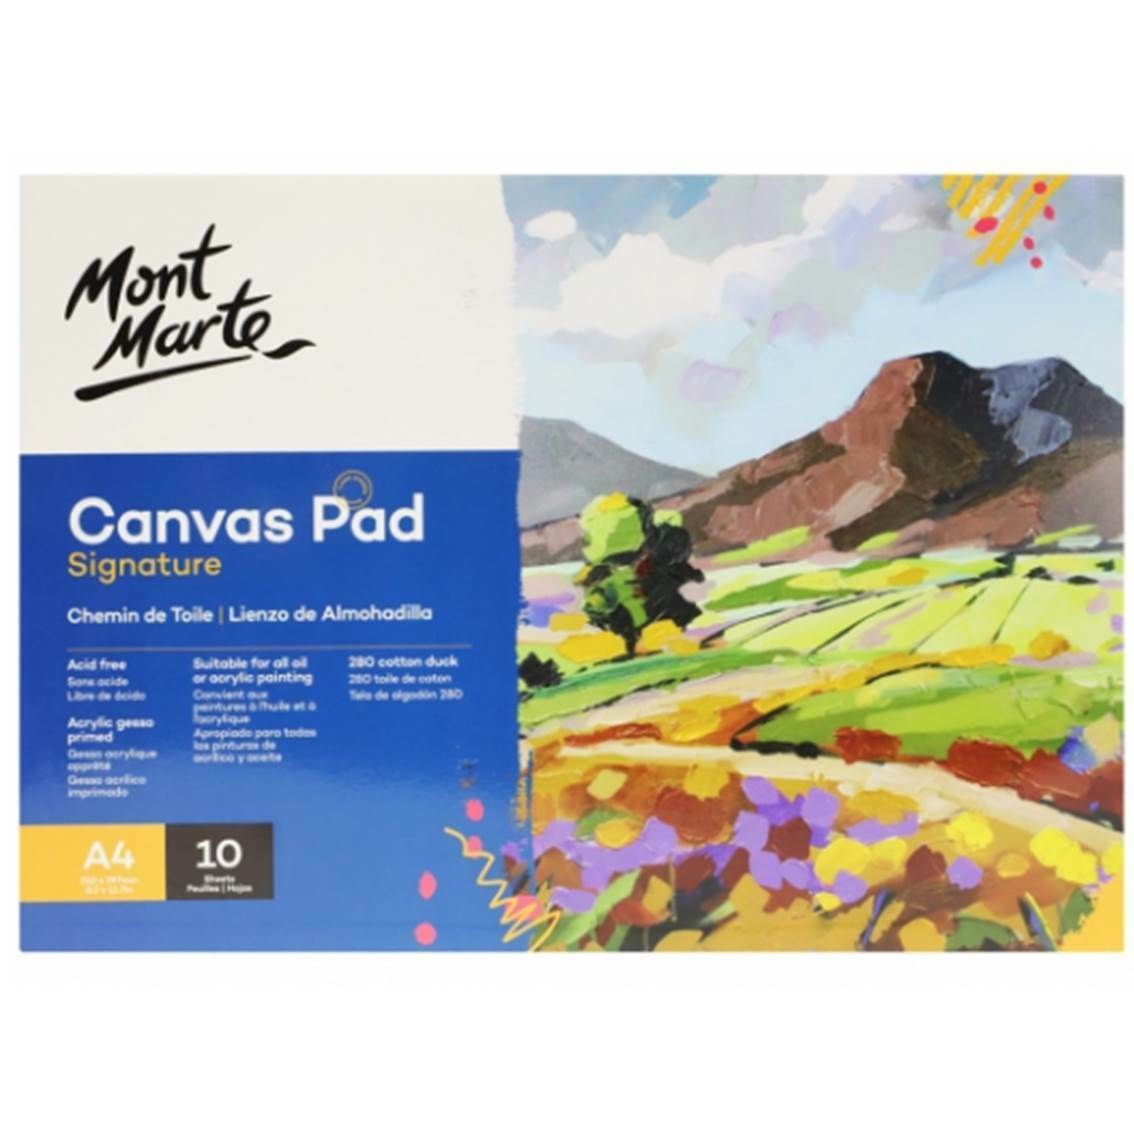 Monte Marte - Canvas A4 pad